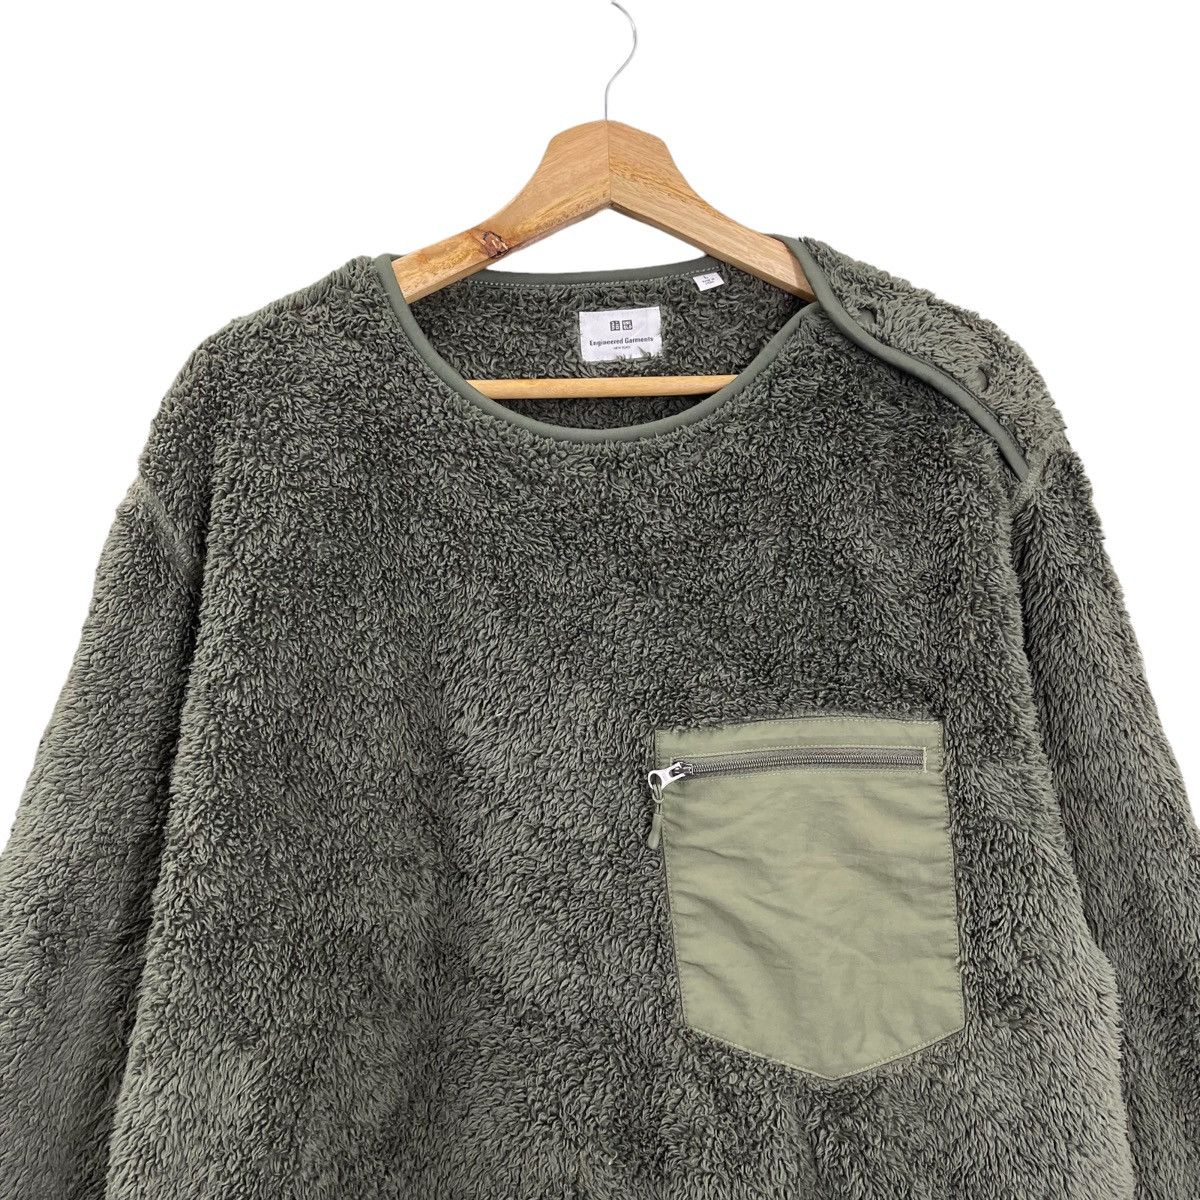 Uniqlo Engineered Garments Pullover Fleece Size L - 4